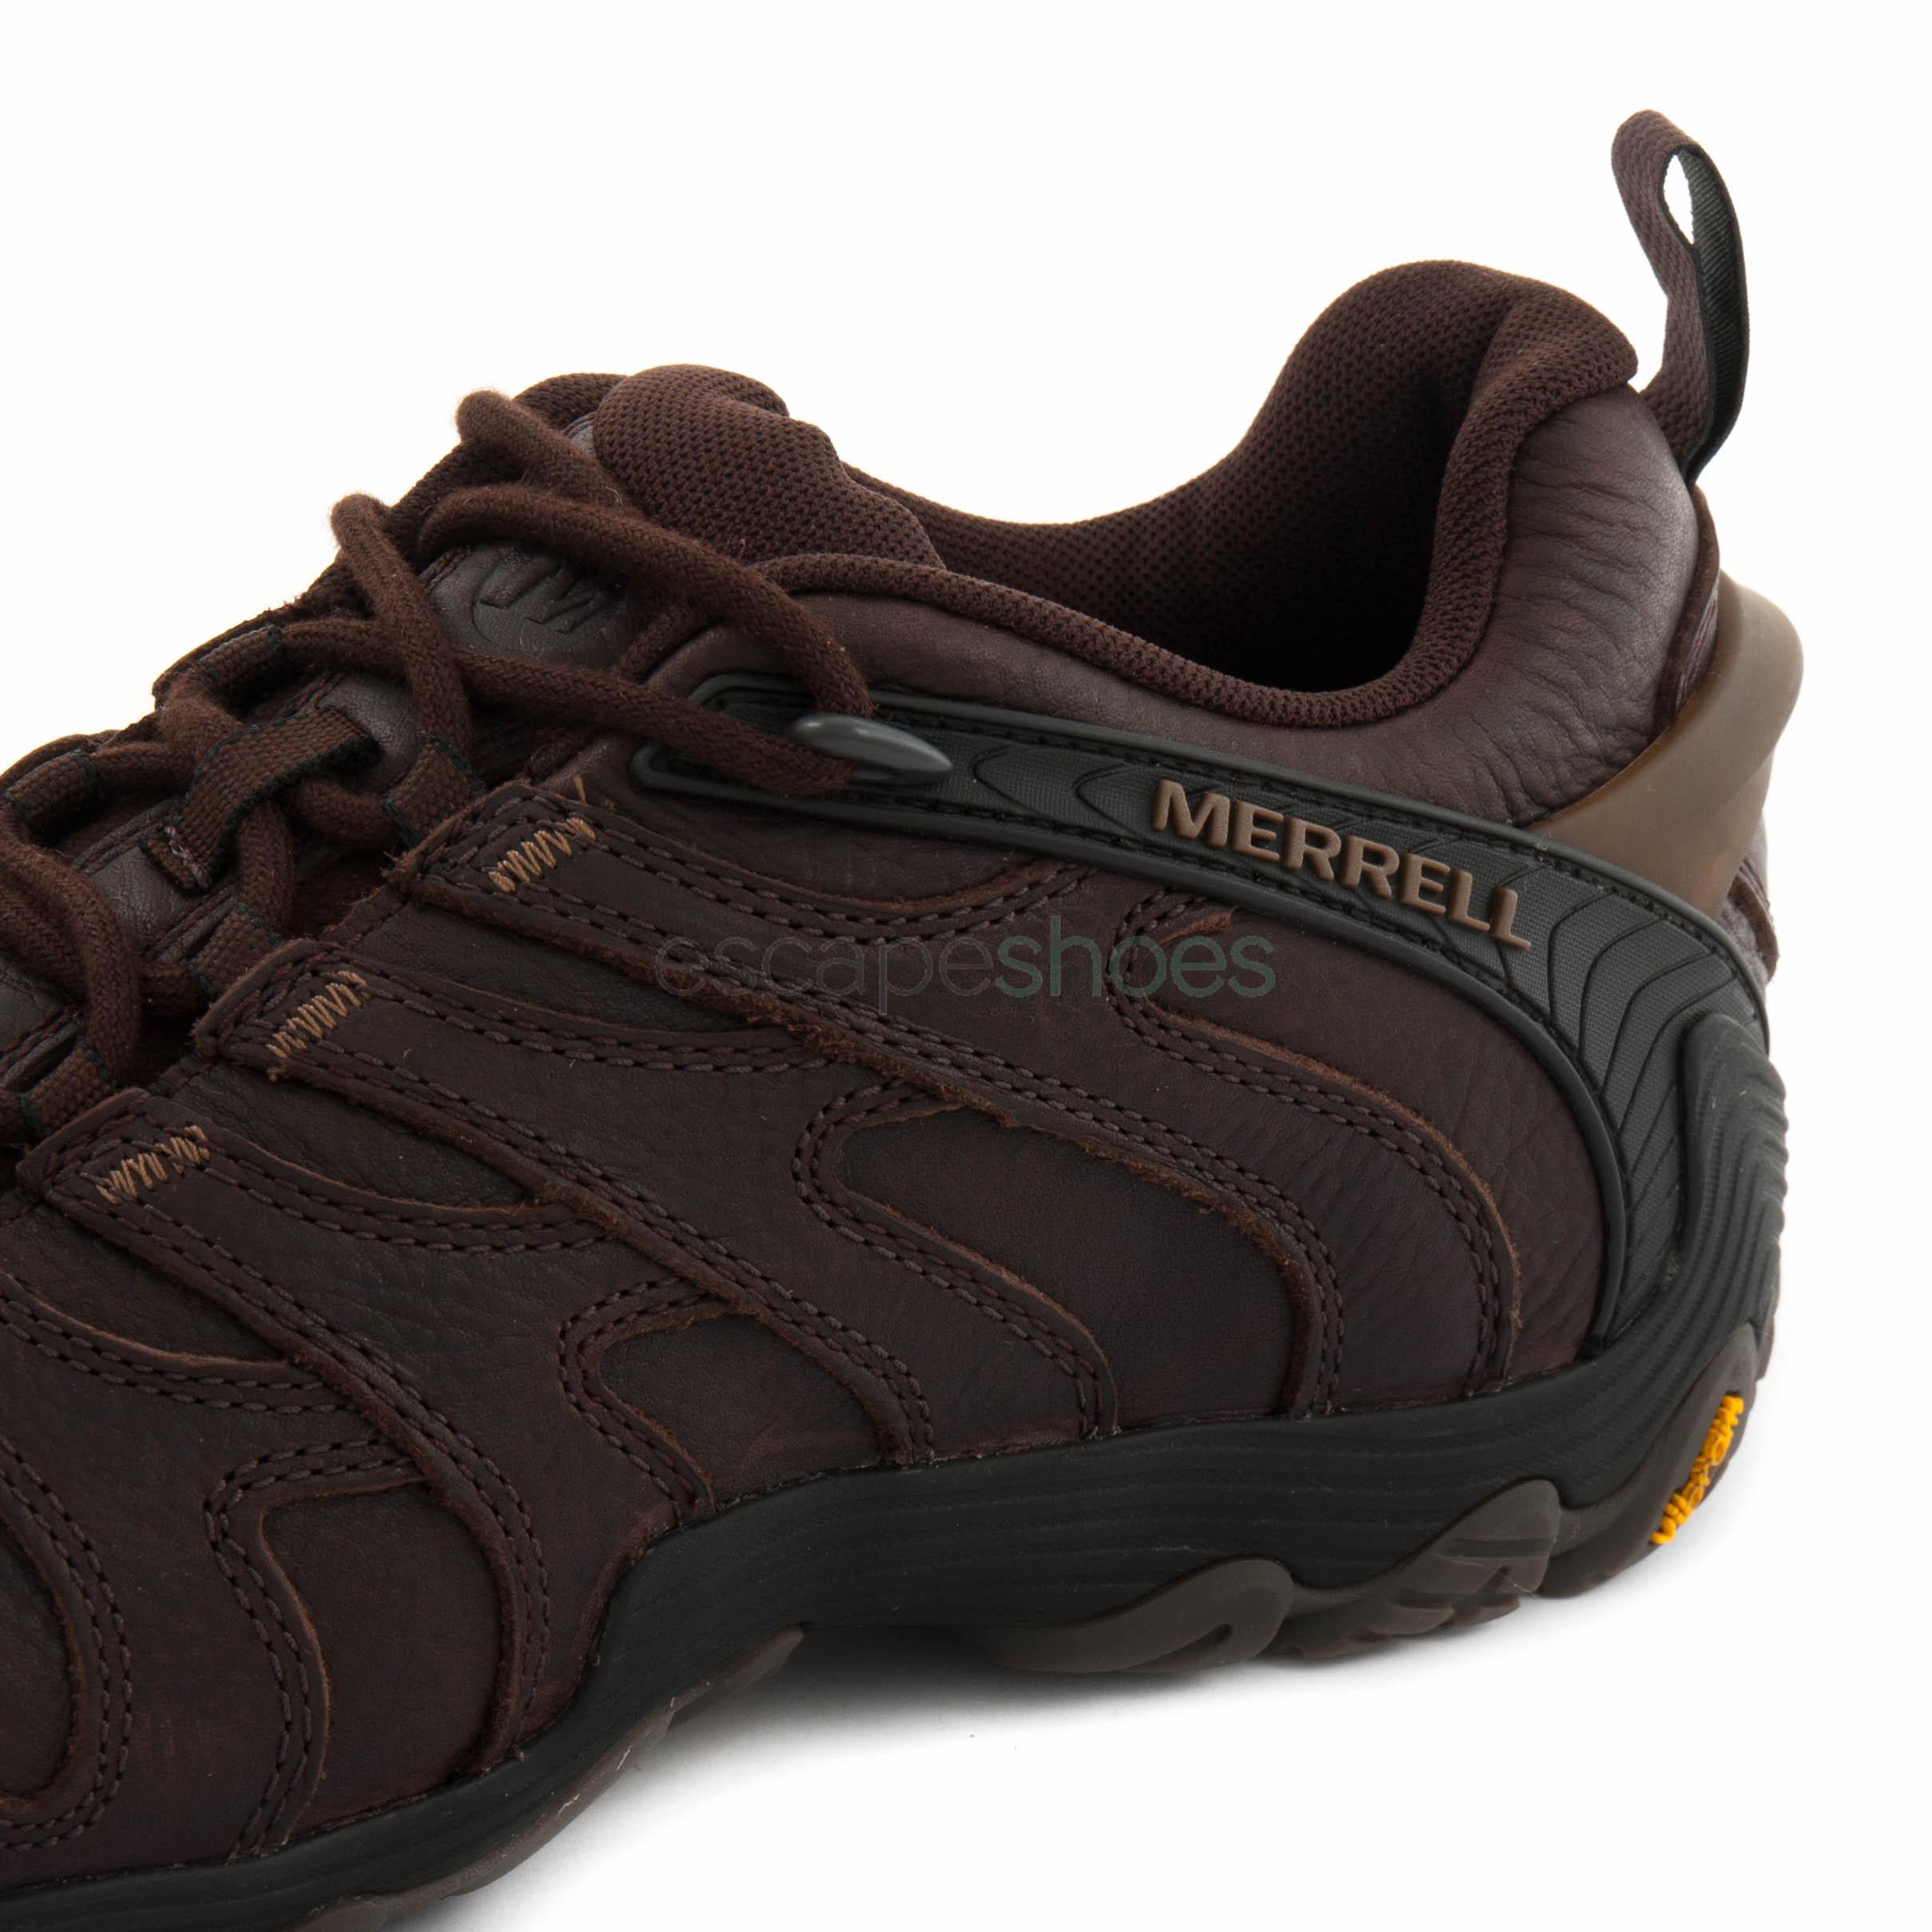 Merrell Chameleon 7 slam señora wanderschuh outdoor Hiking cortos botas zapato